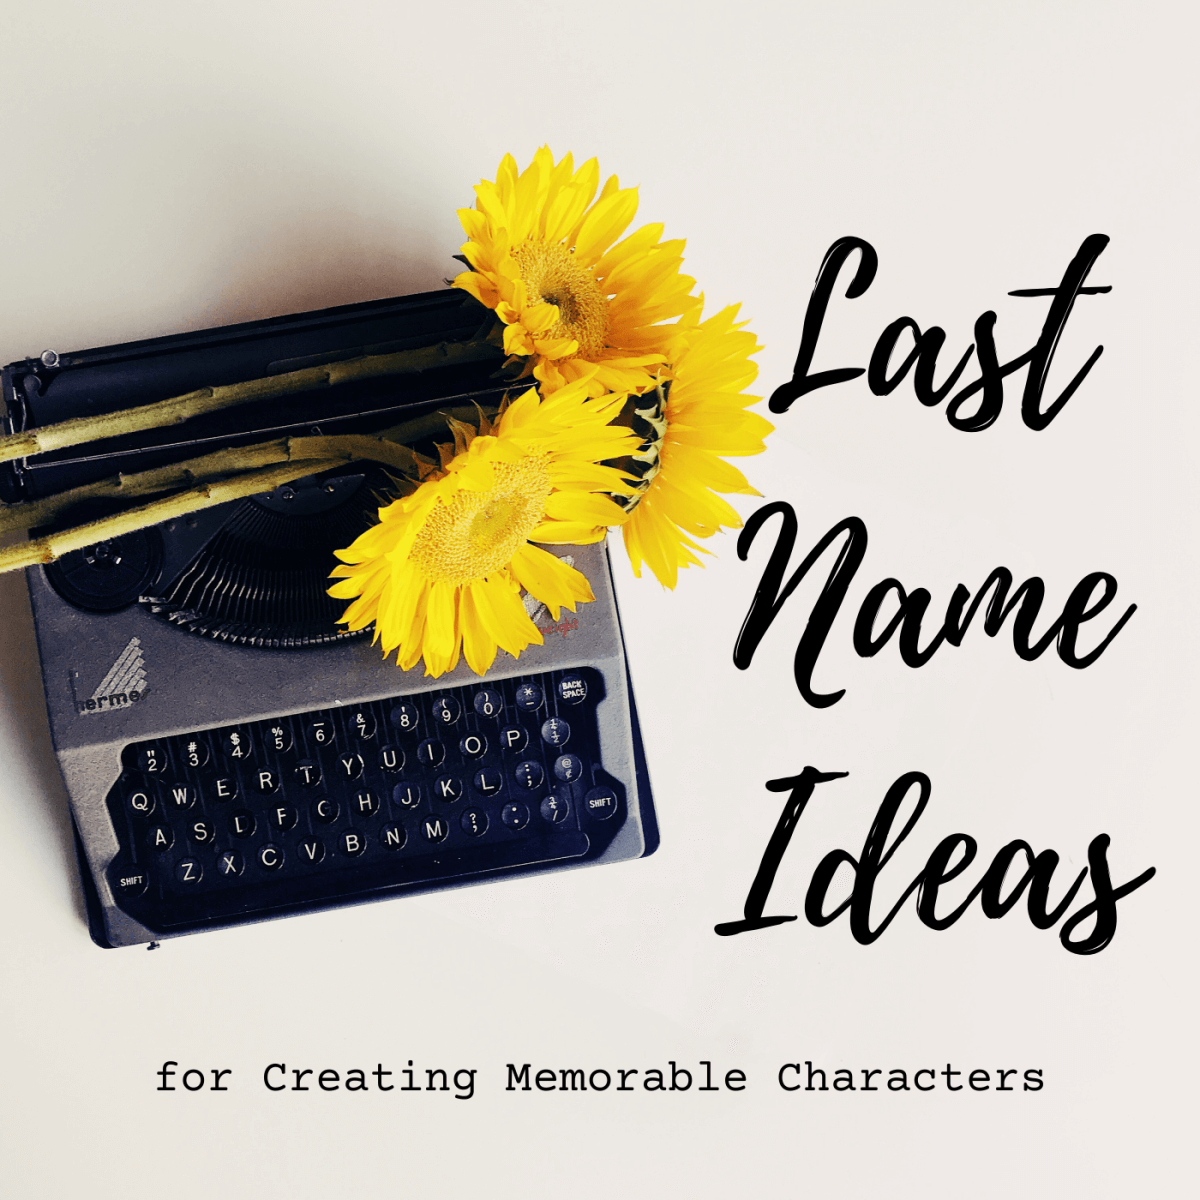 A Cool Last Names List for Character Creation - HobbyLark